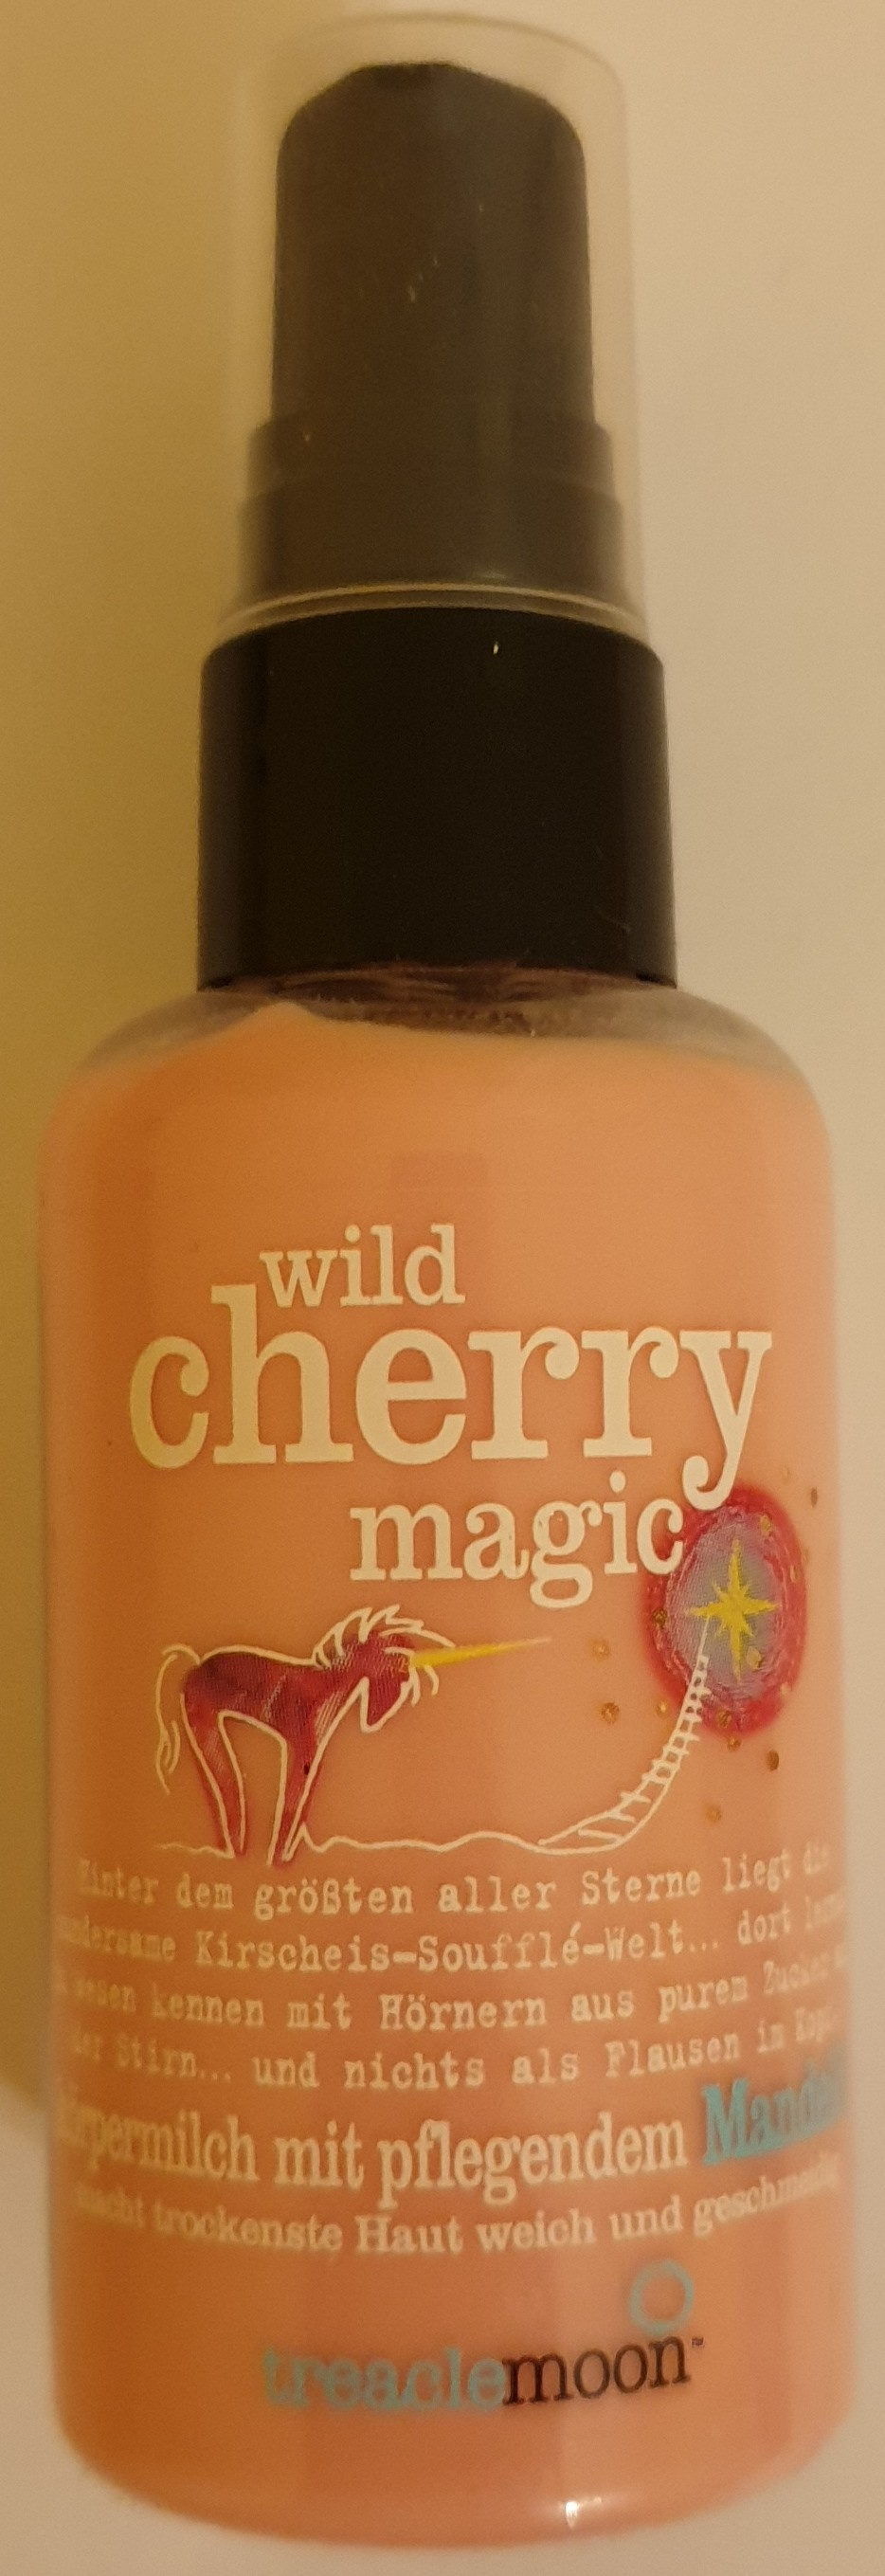 wild cherry magic - Produto - de